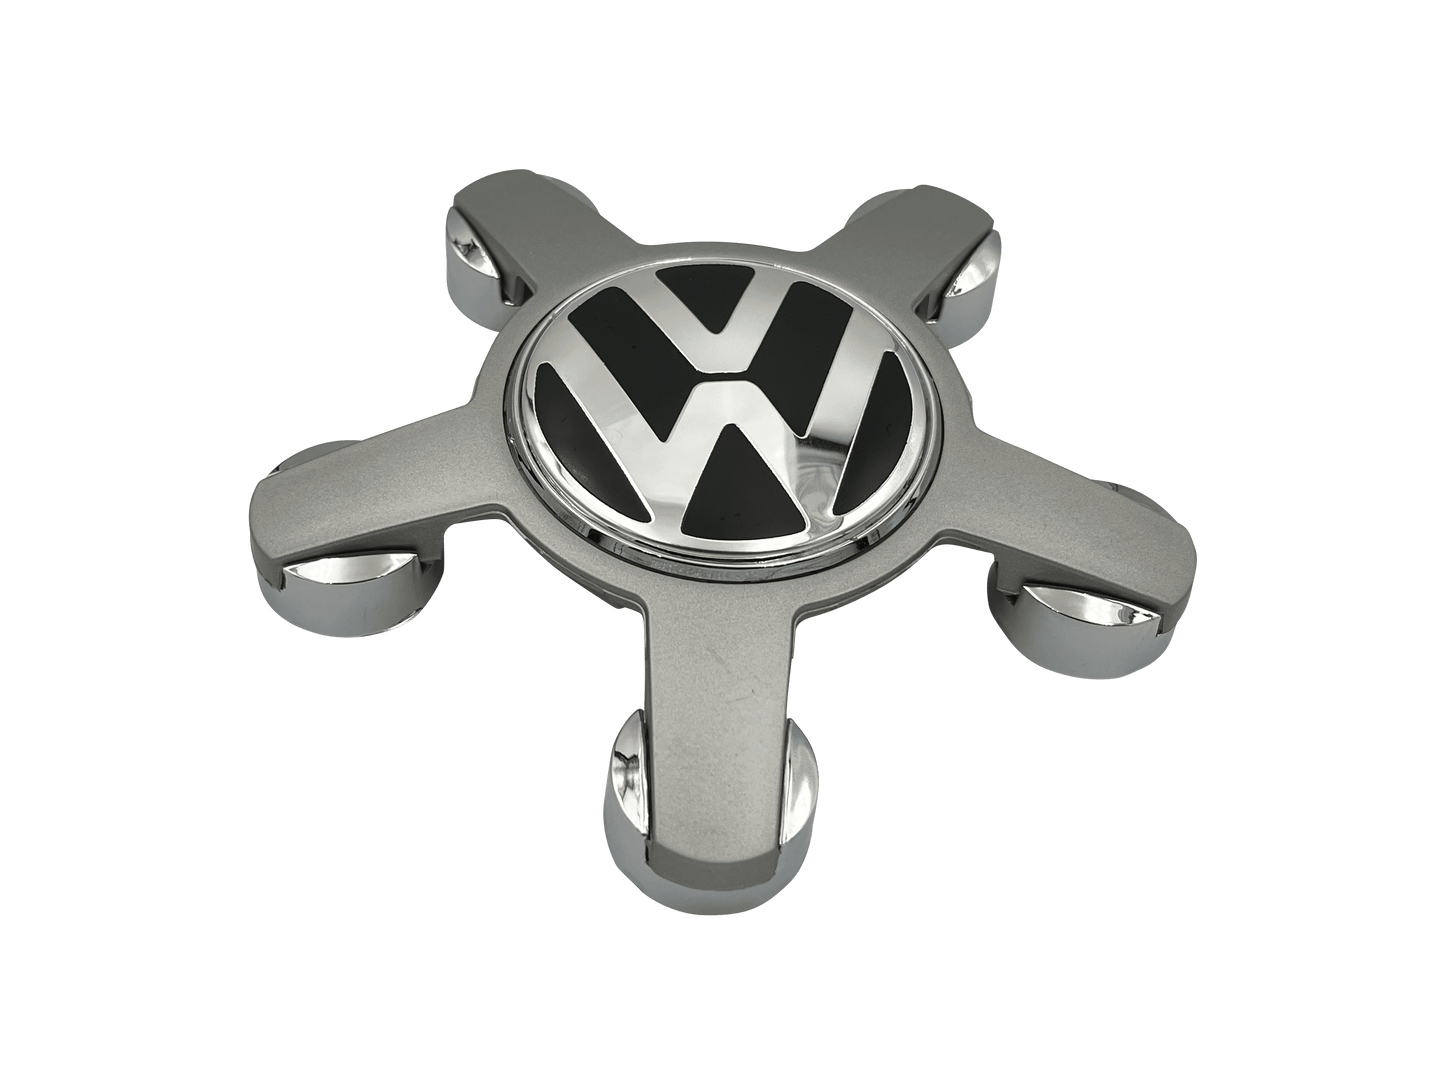 4 pieces. Blue &amp; Chrome VW Center caps